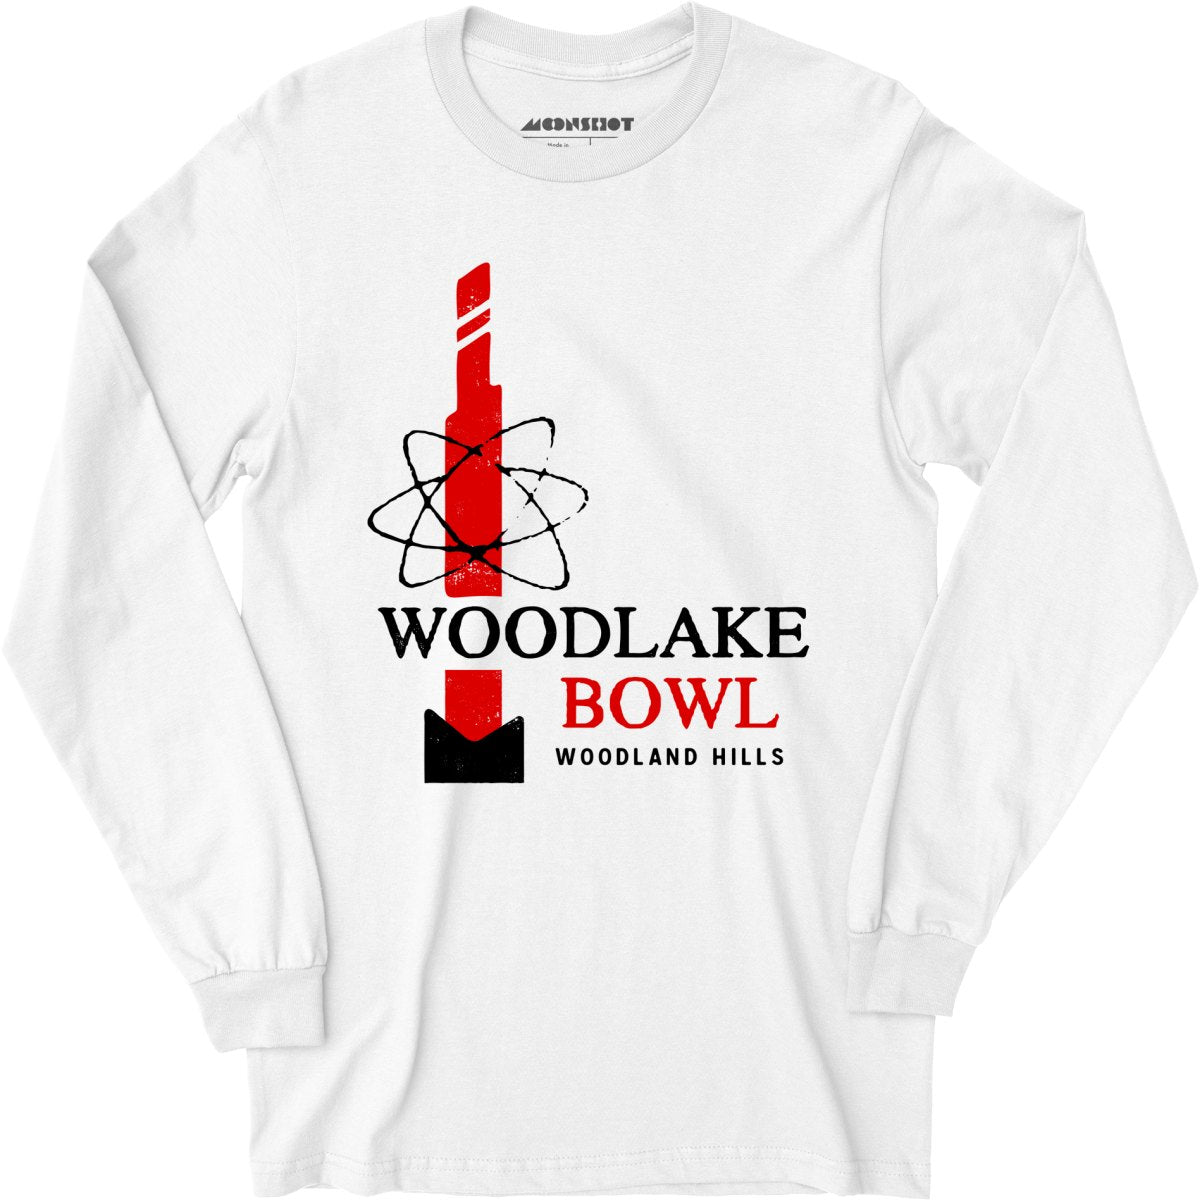 Woodlake Bowl - Woodland Hills, CA - Vintage Bowling Alley - Long Sleeve T-Shirt